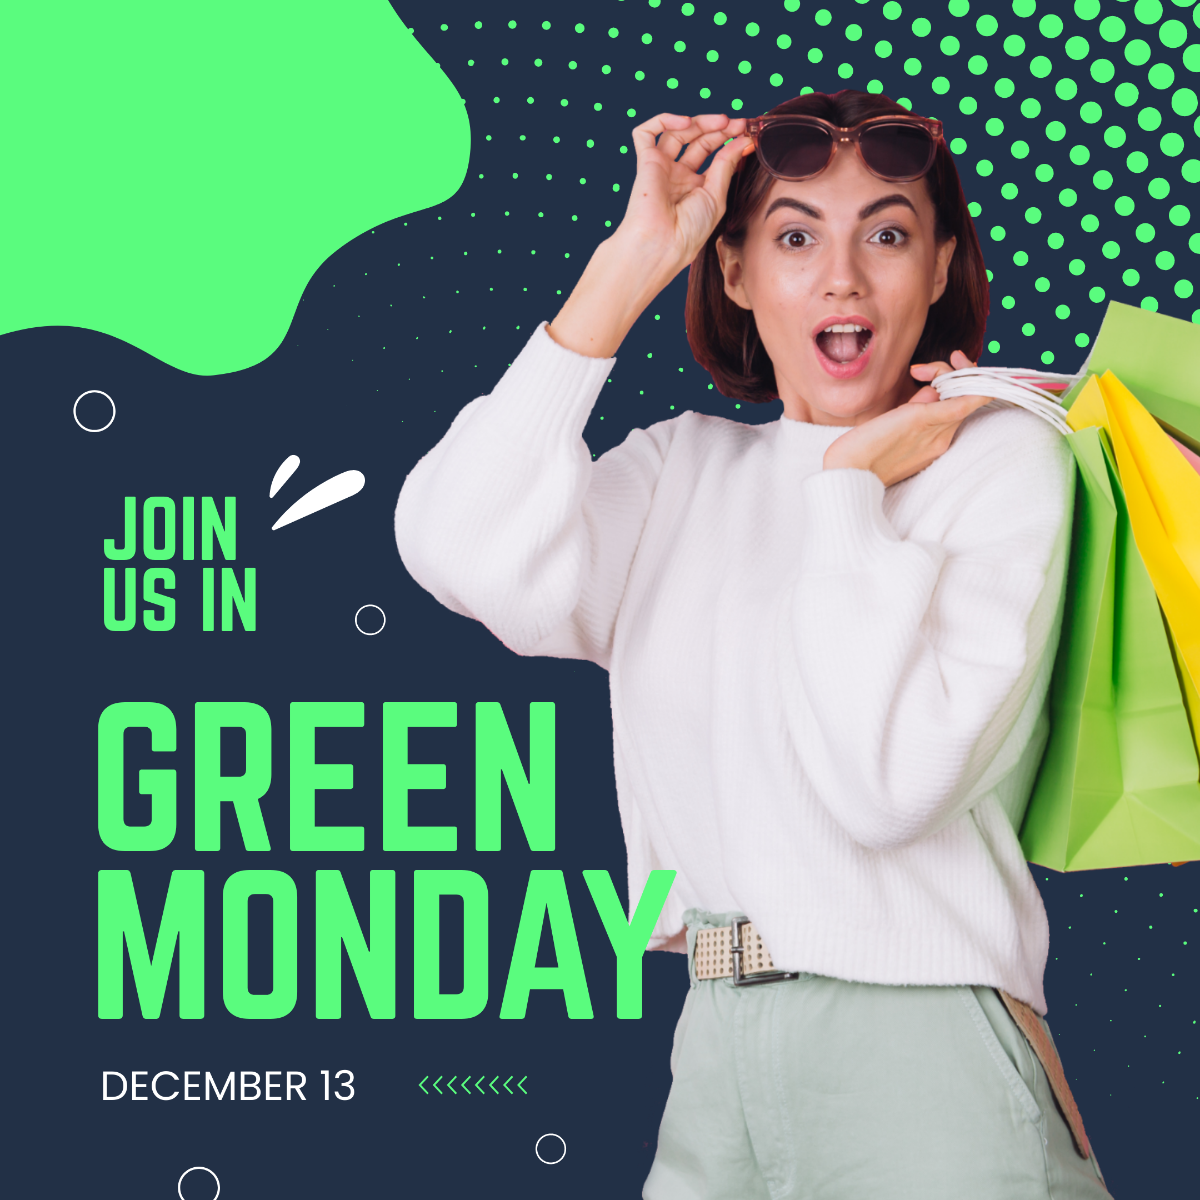 Green Monday Promotion Instagram Post